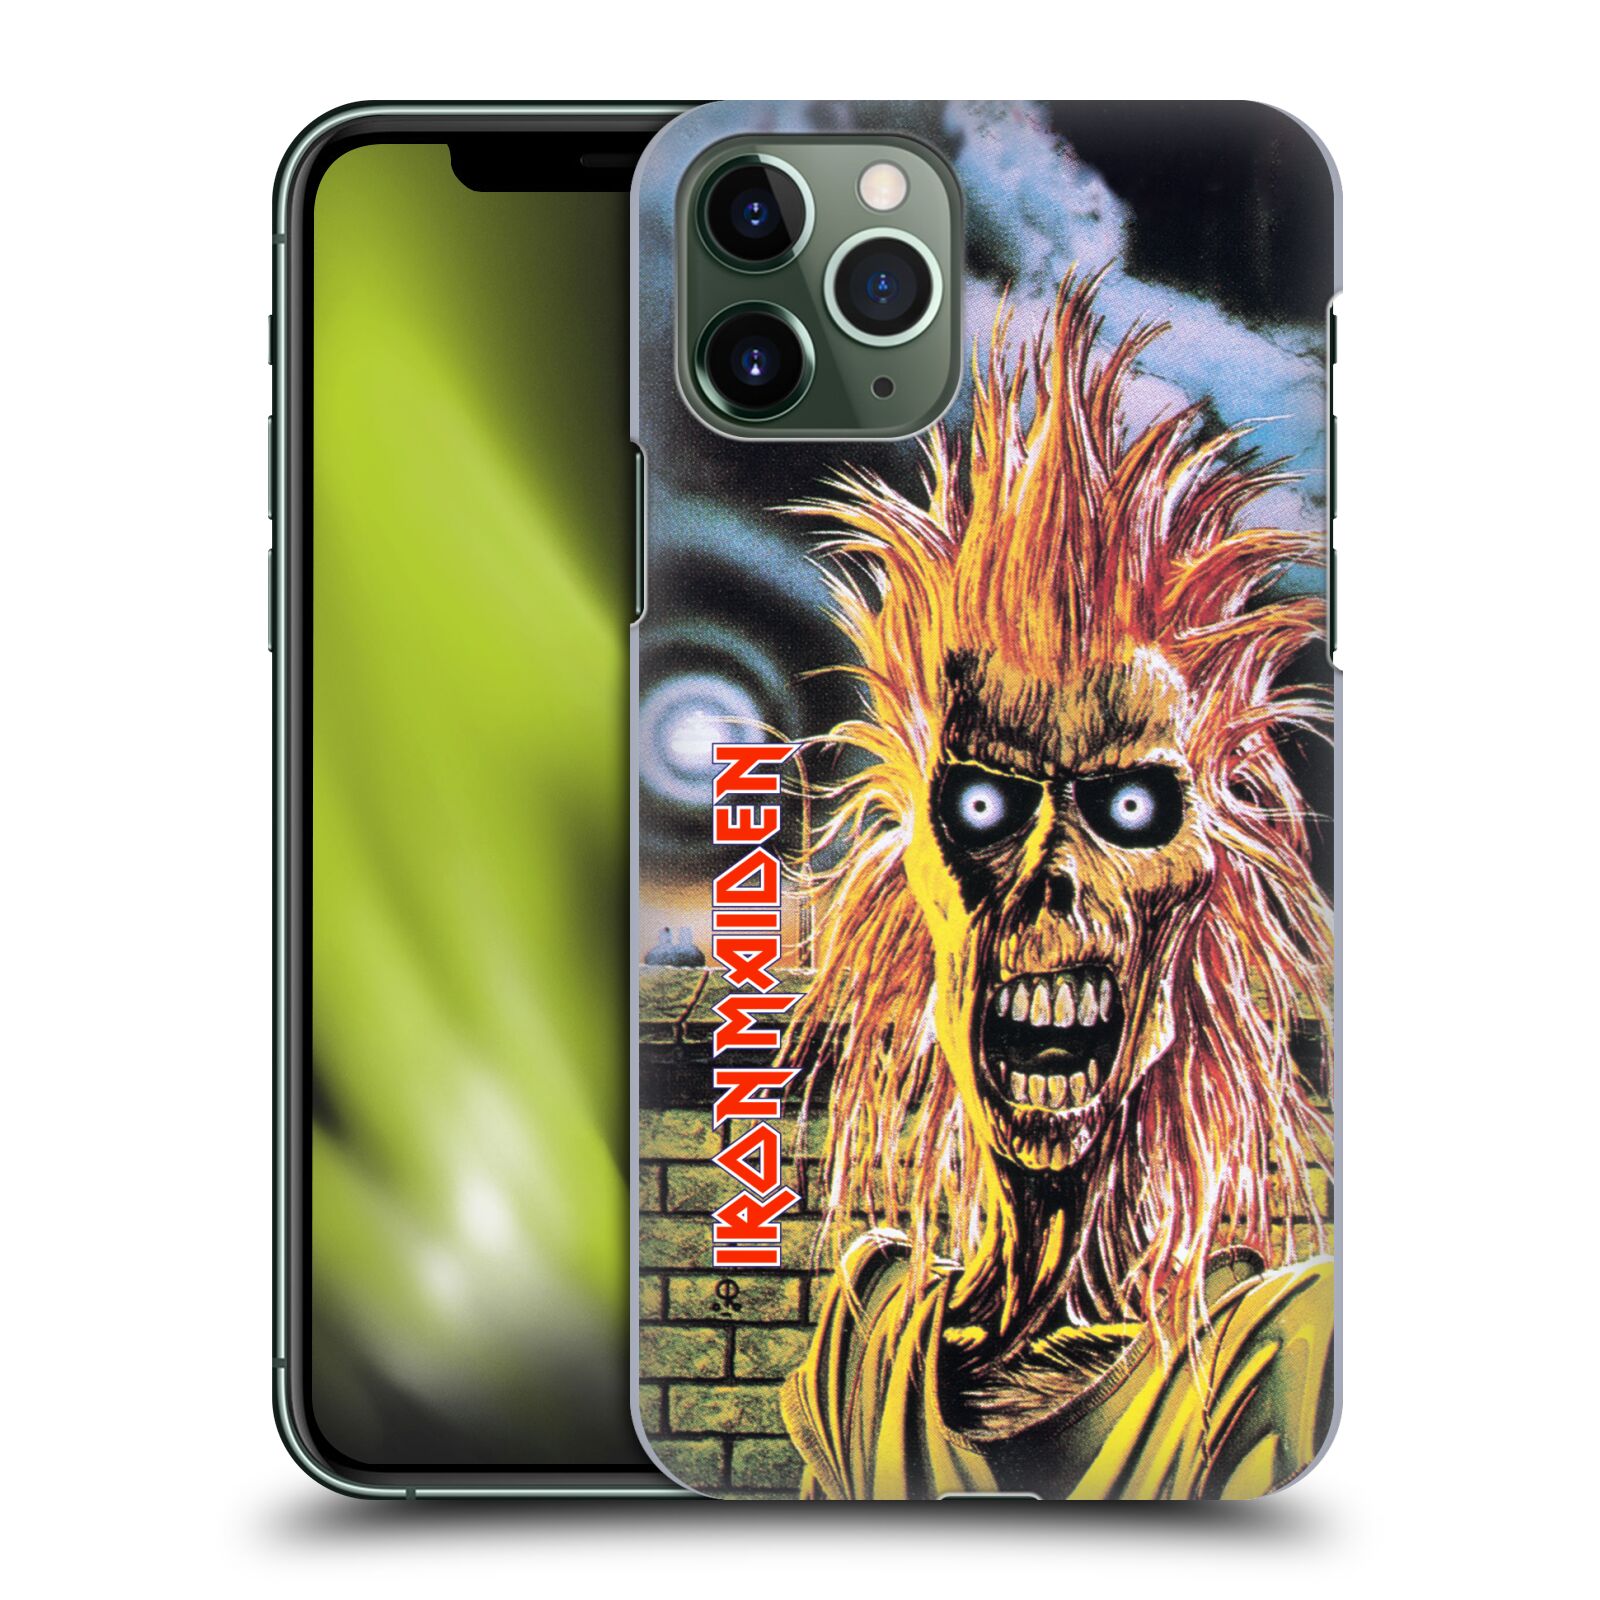 Pouzdro na mobil Apple Iphone 11 PRO - HEAD CASE - Heavymetalová skupina Iron Maiden punker